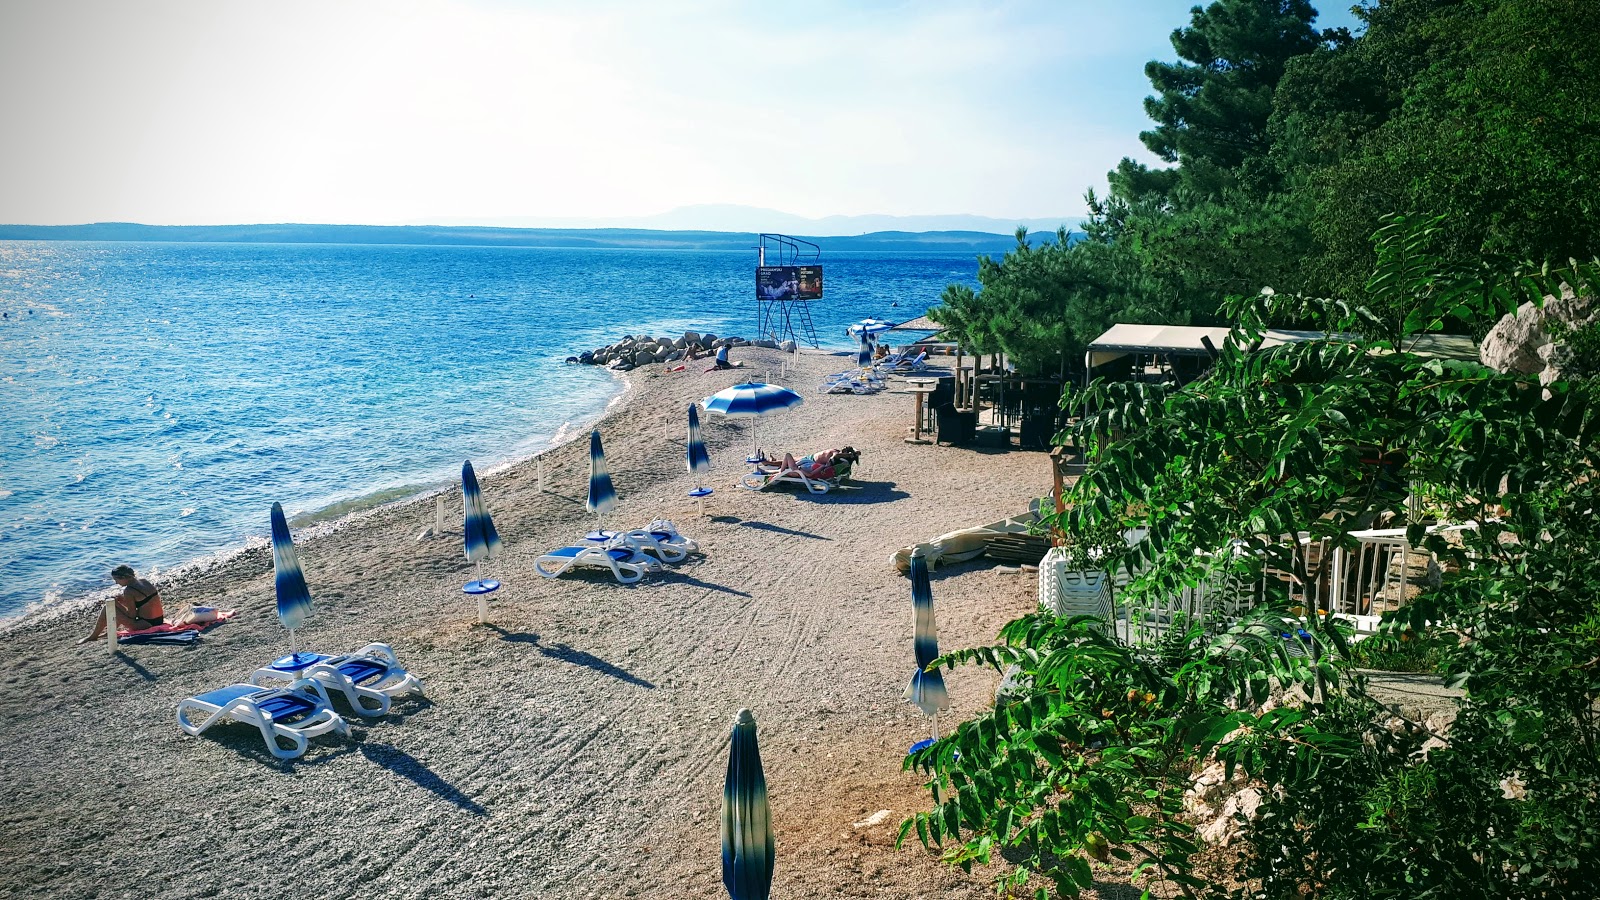 Photo de Capriccio beach avec plusieurs petites baies